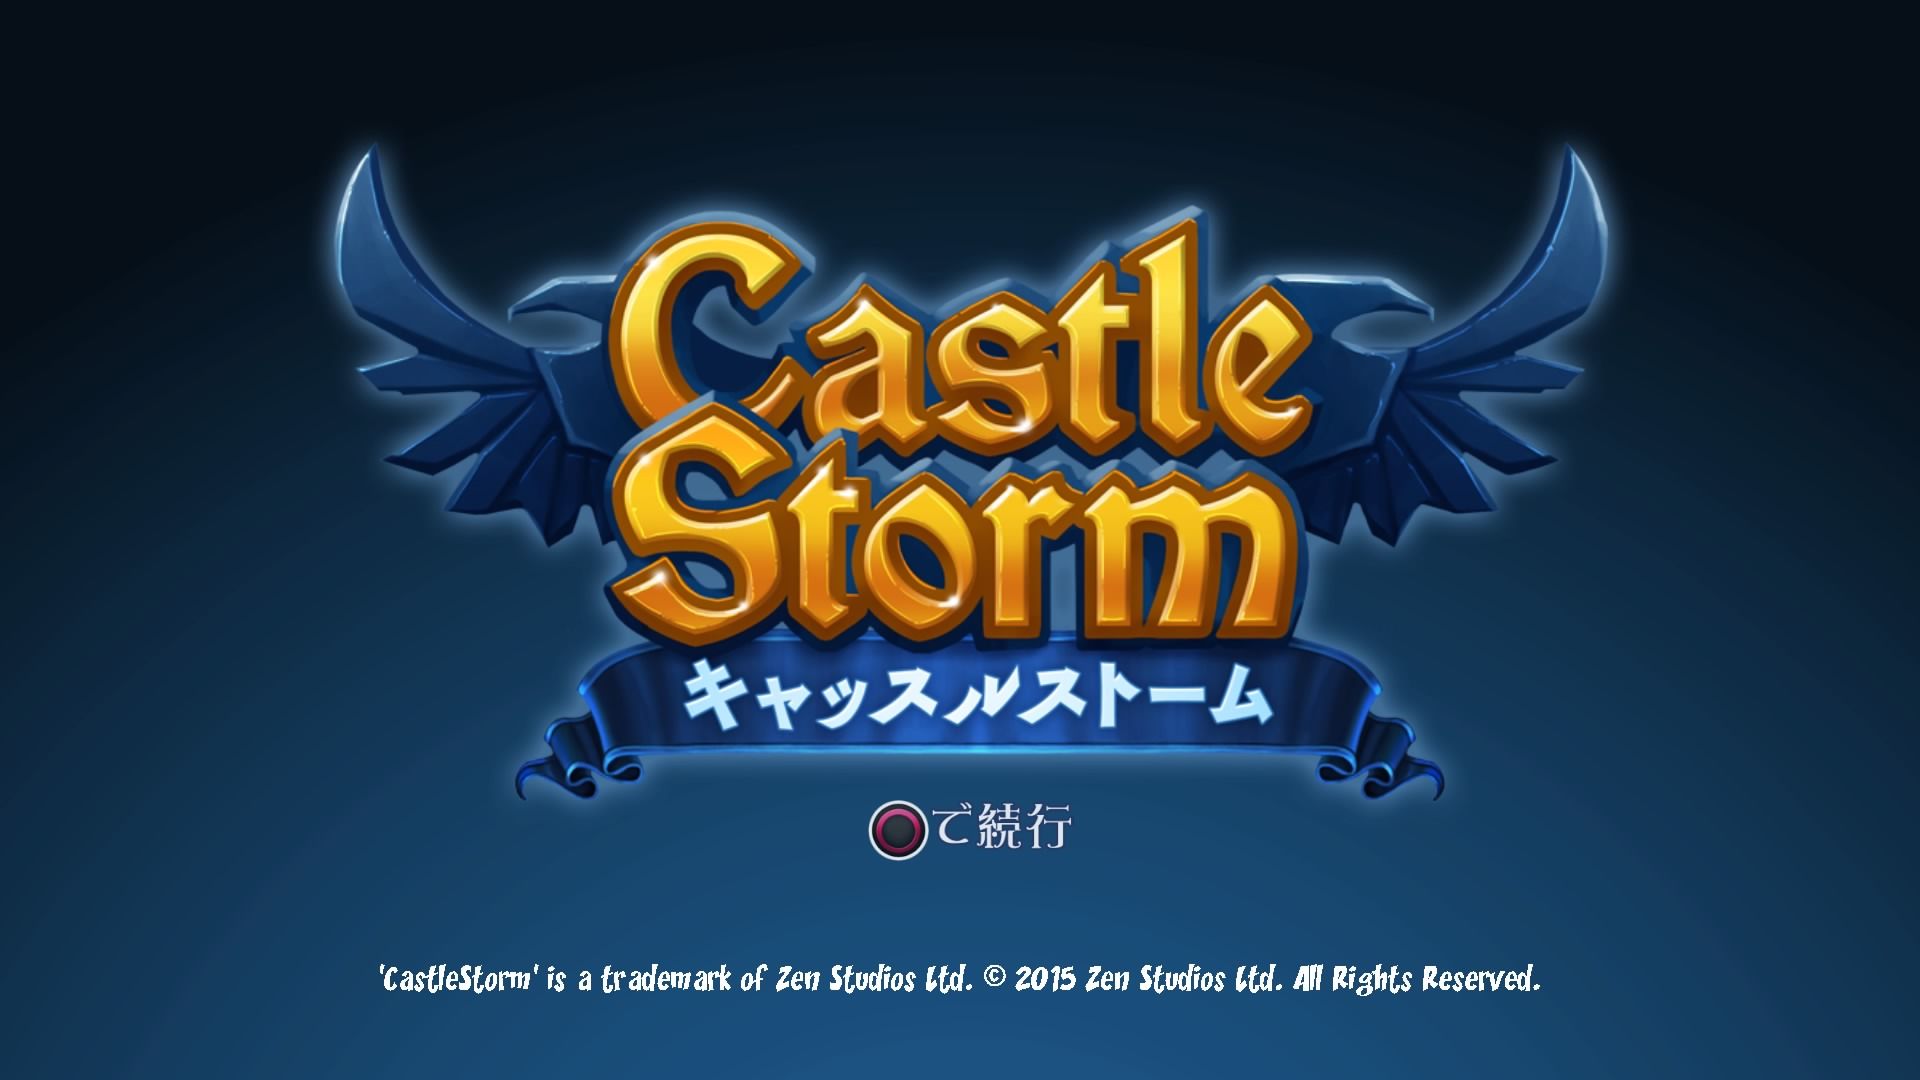 Ps4 Castlestorm キャッスルストーム No1 ねっとwork Ps3 Ps4のゲームブログ 楽天ブログ